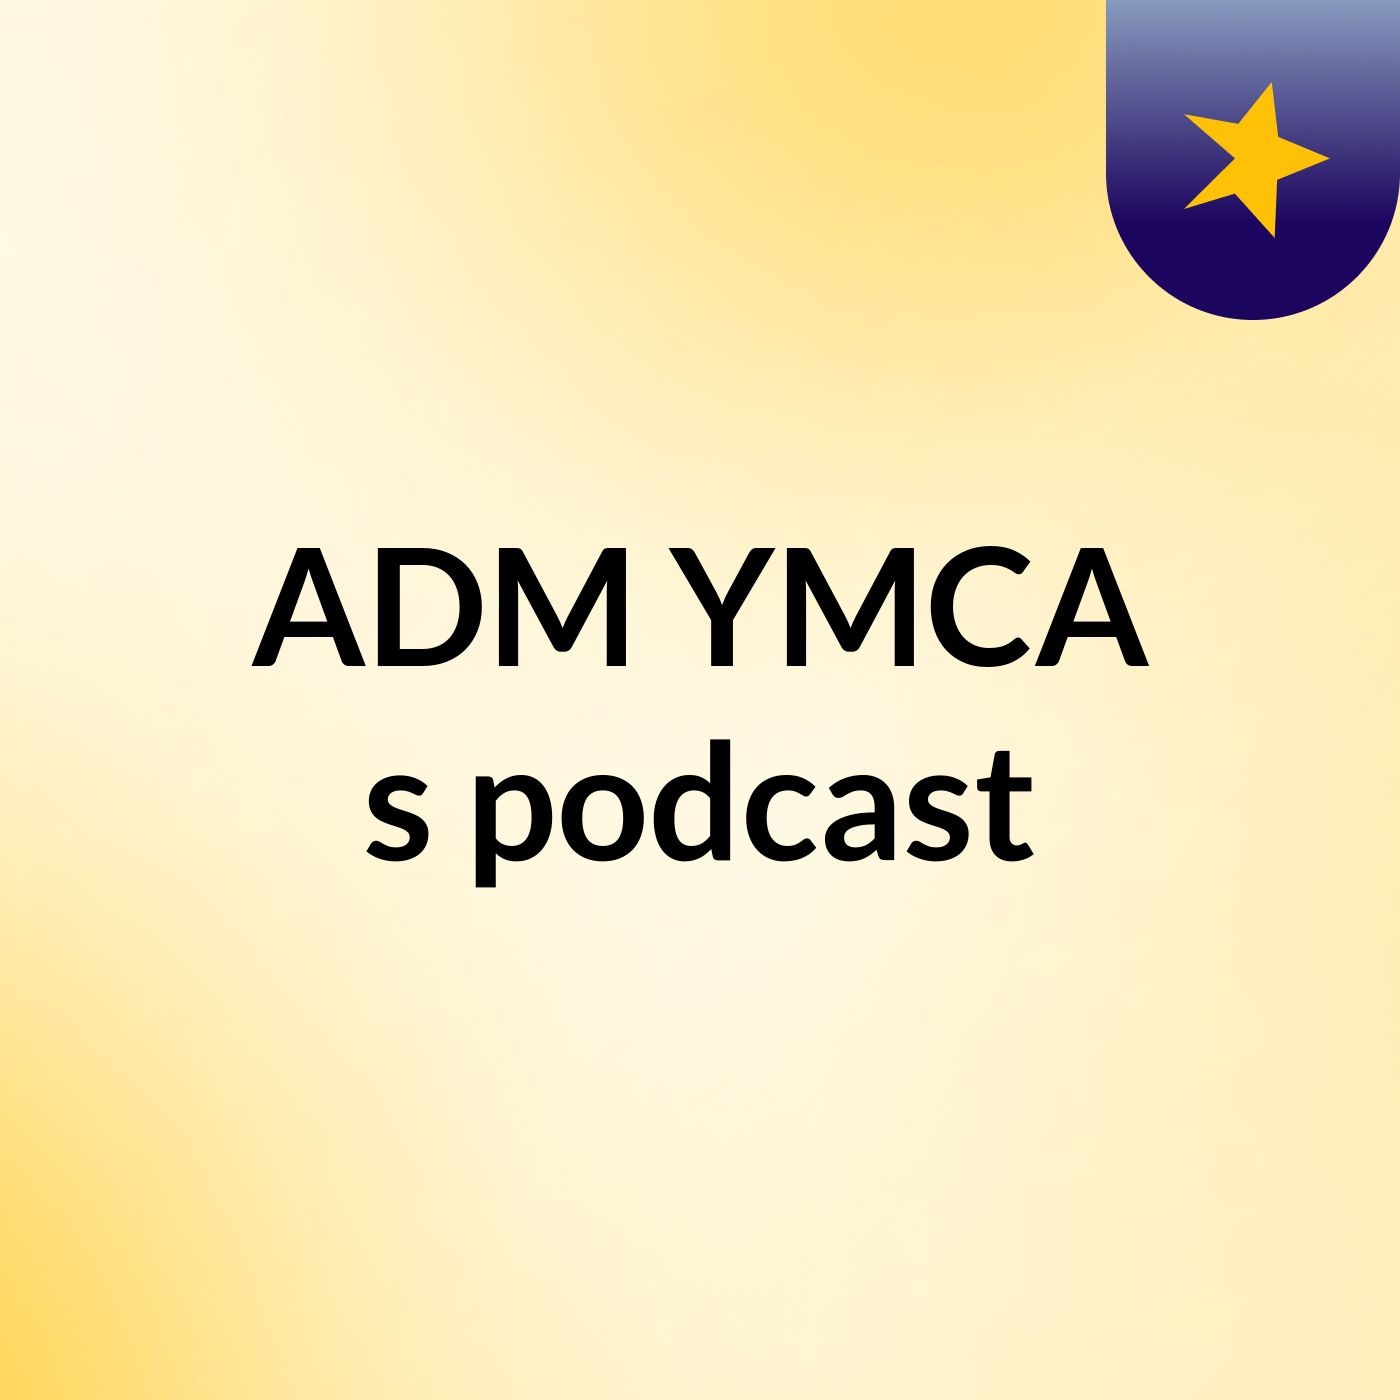 ADM YMCA's podcast